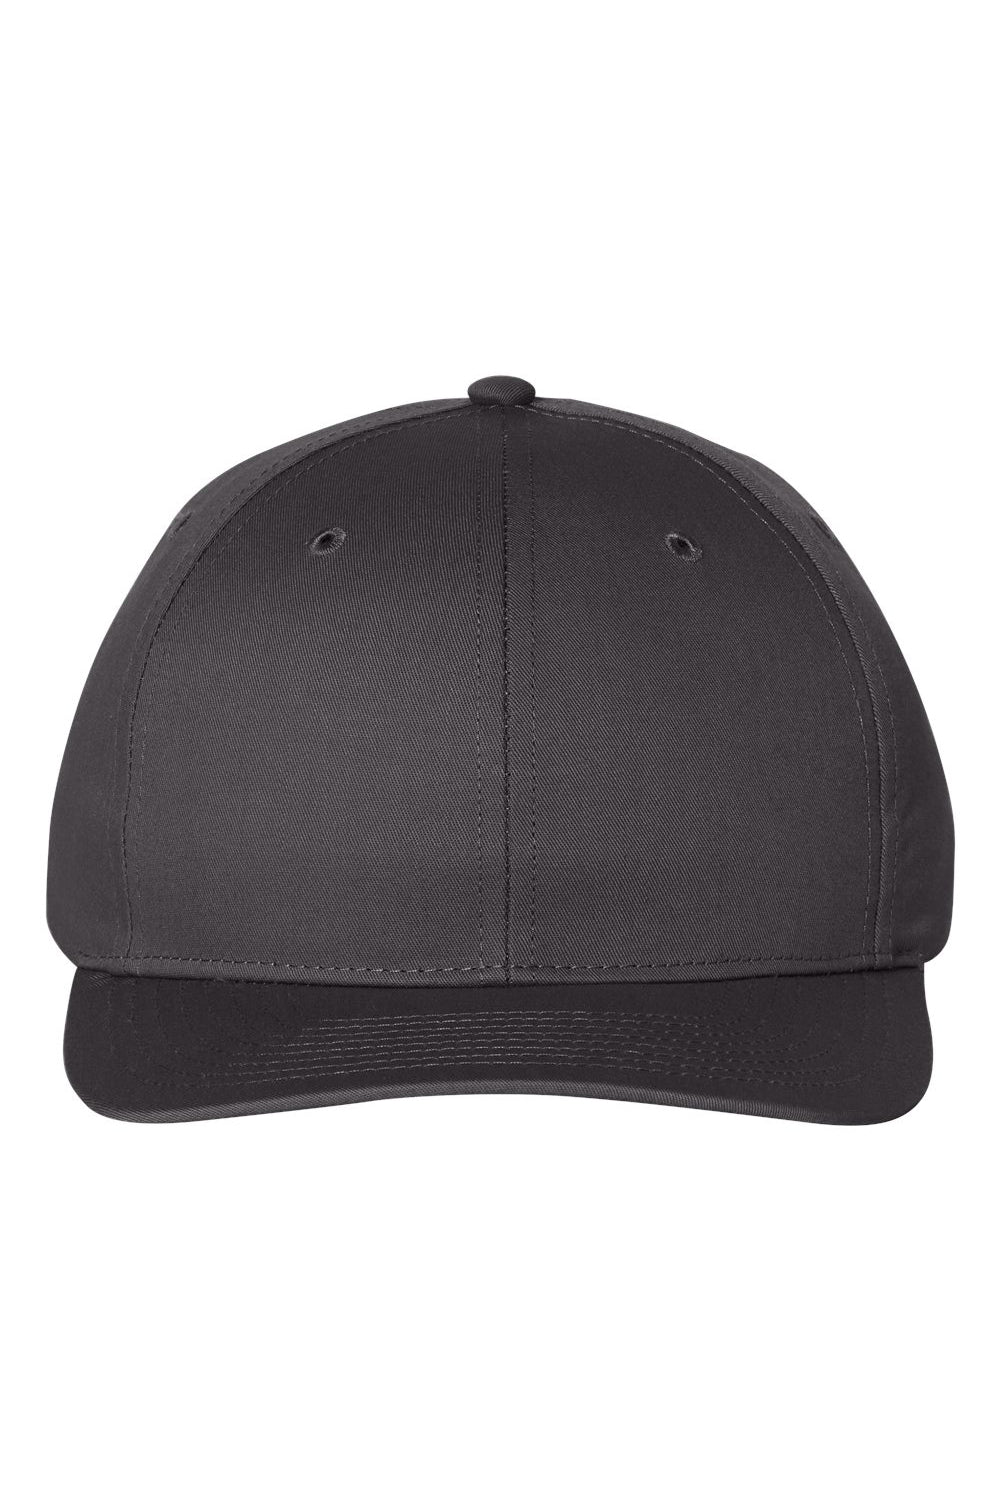 Richardson 212 Mens Pro Twill Snapback Hat Charcoal Grey Flat Front